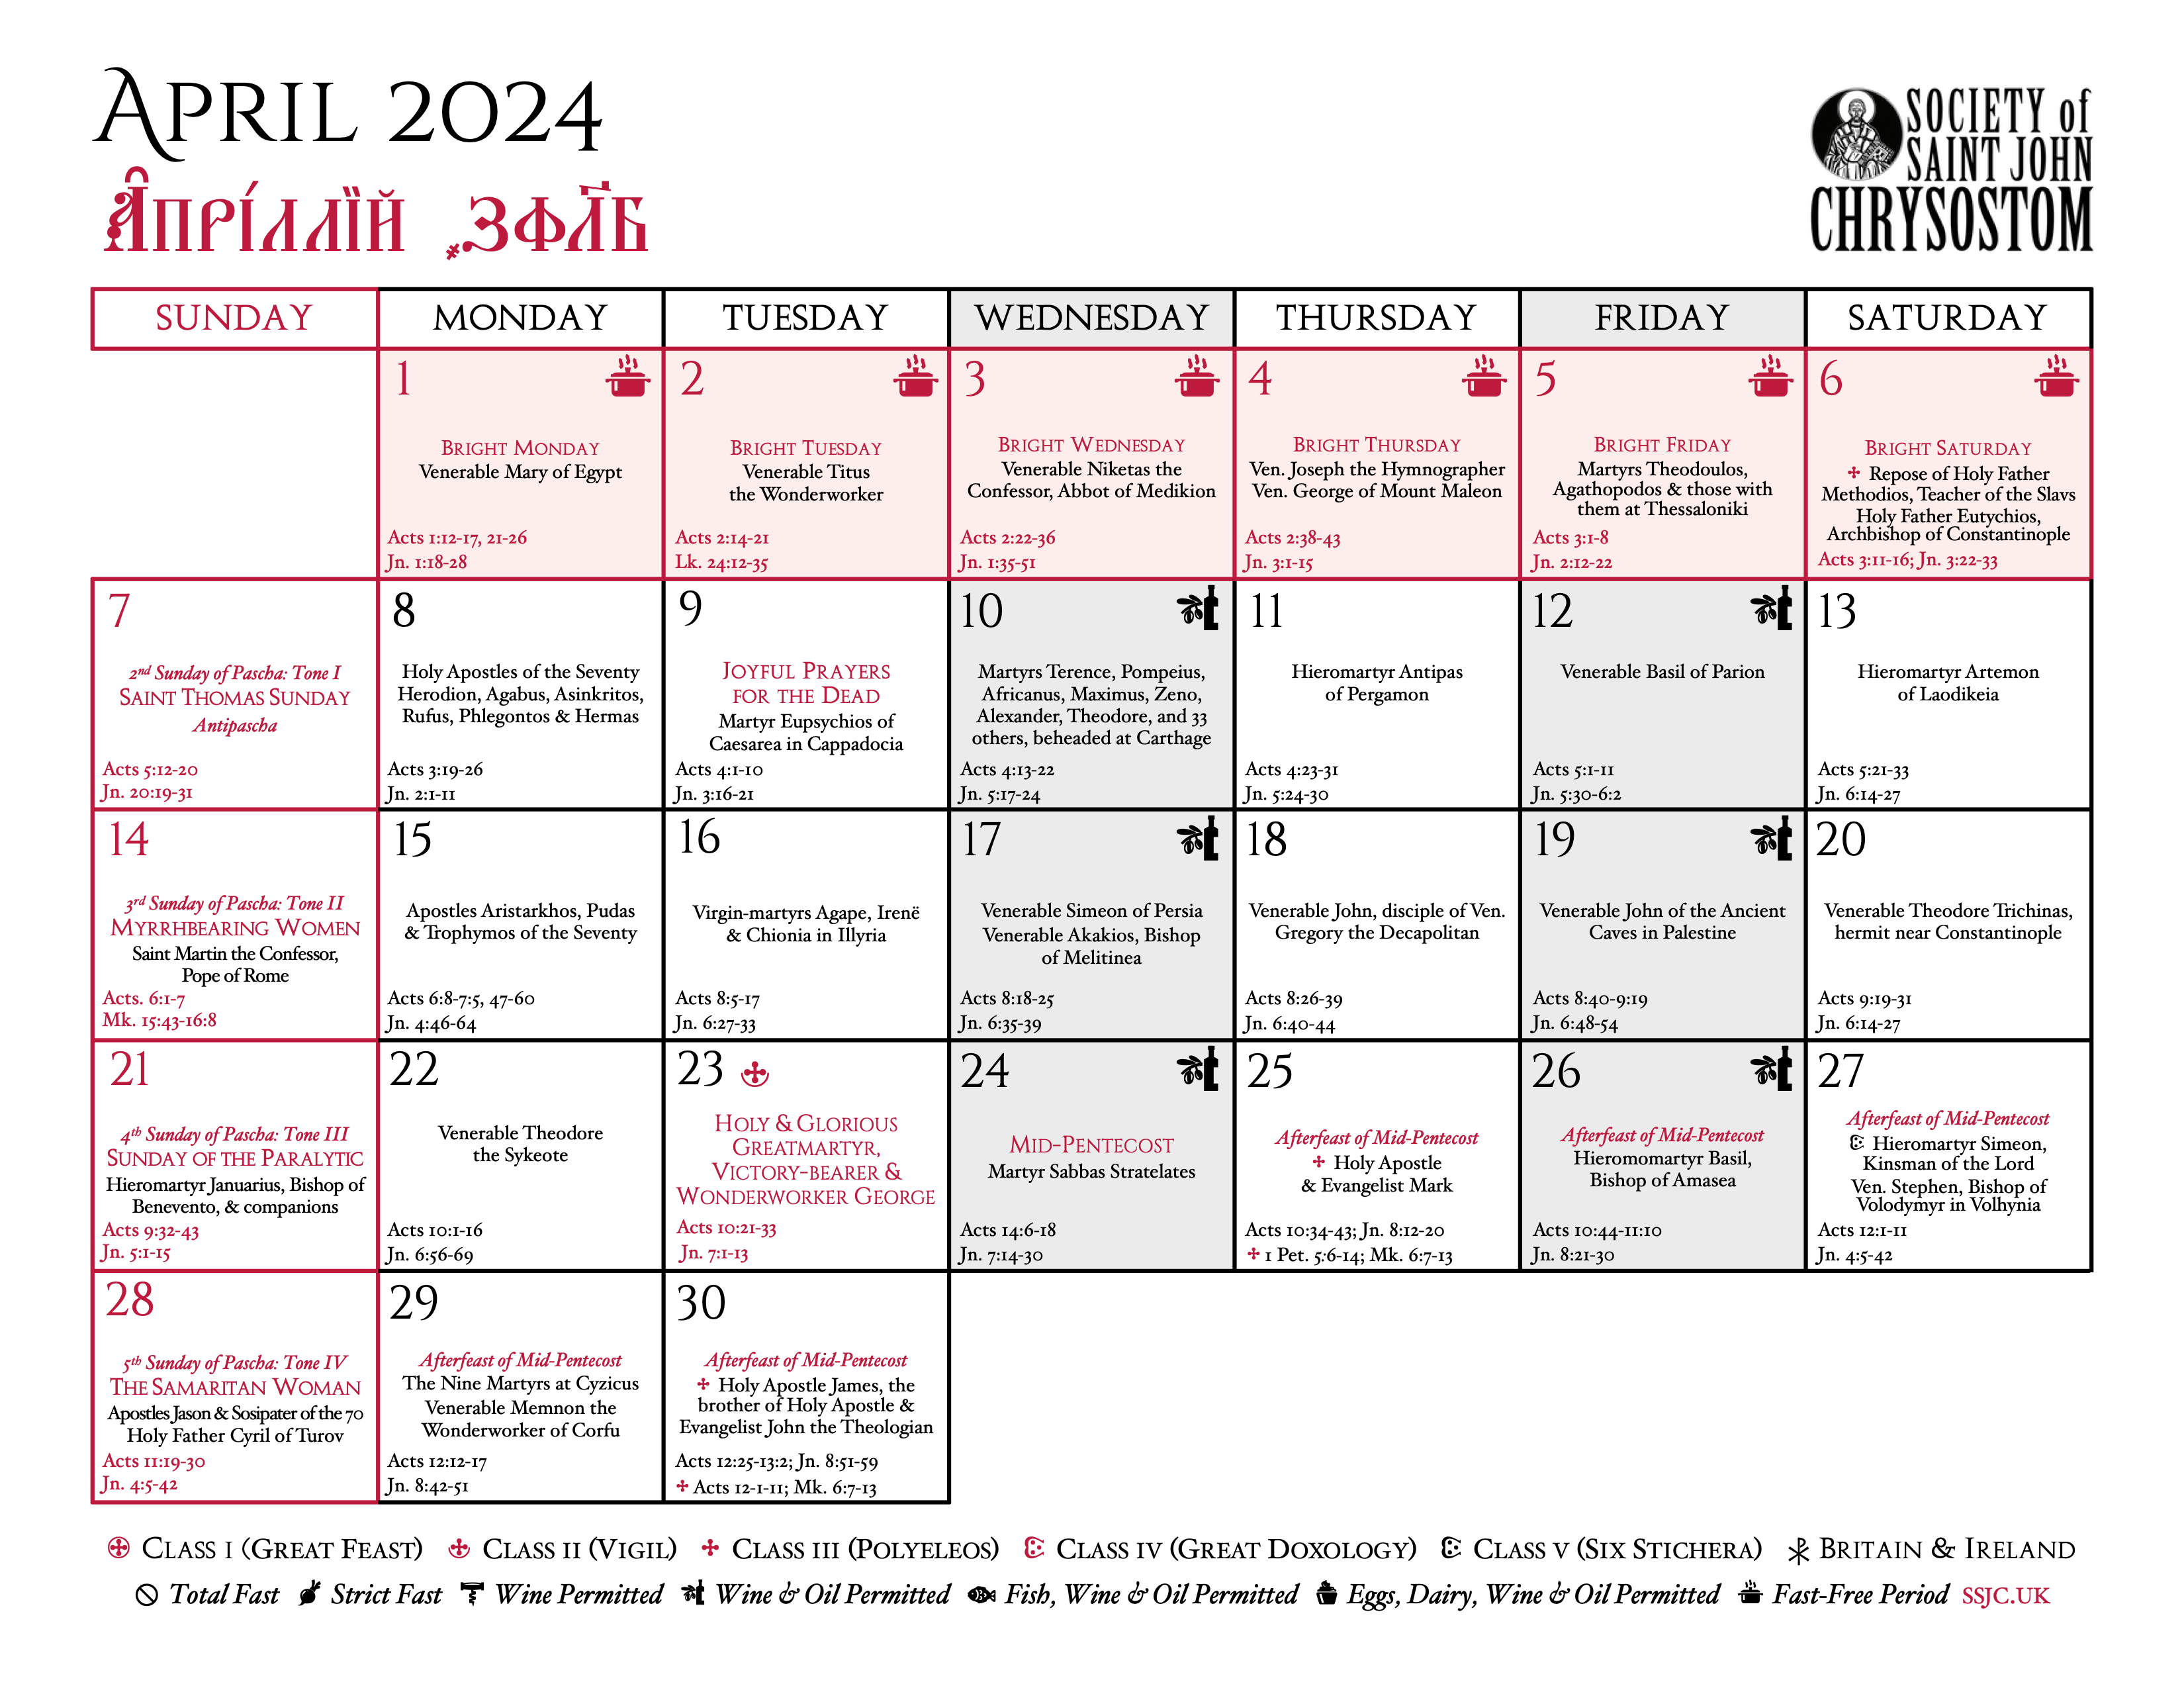 April 2024 calendar published